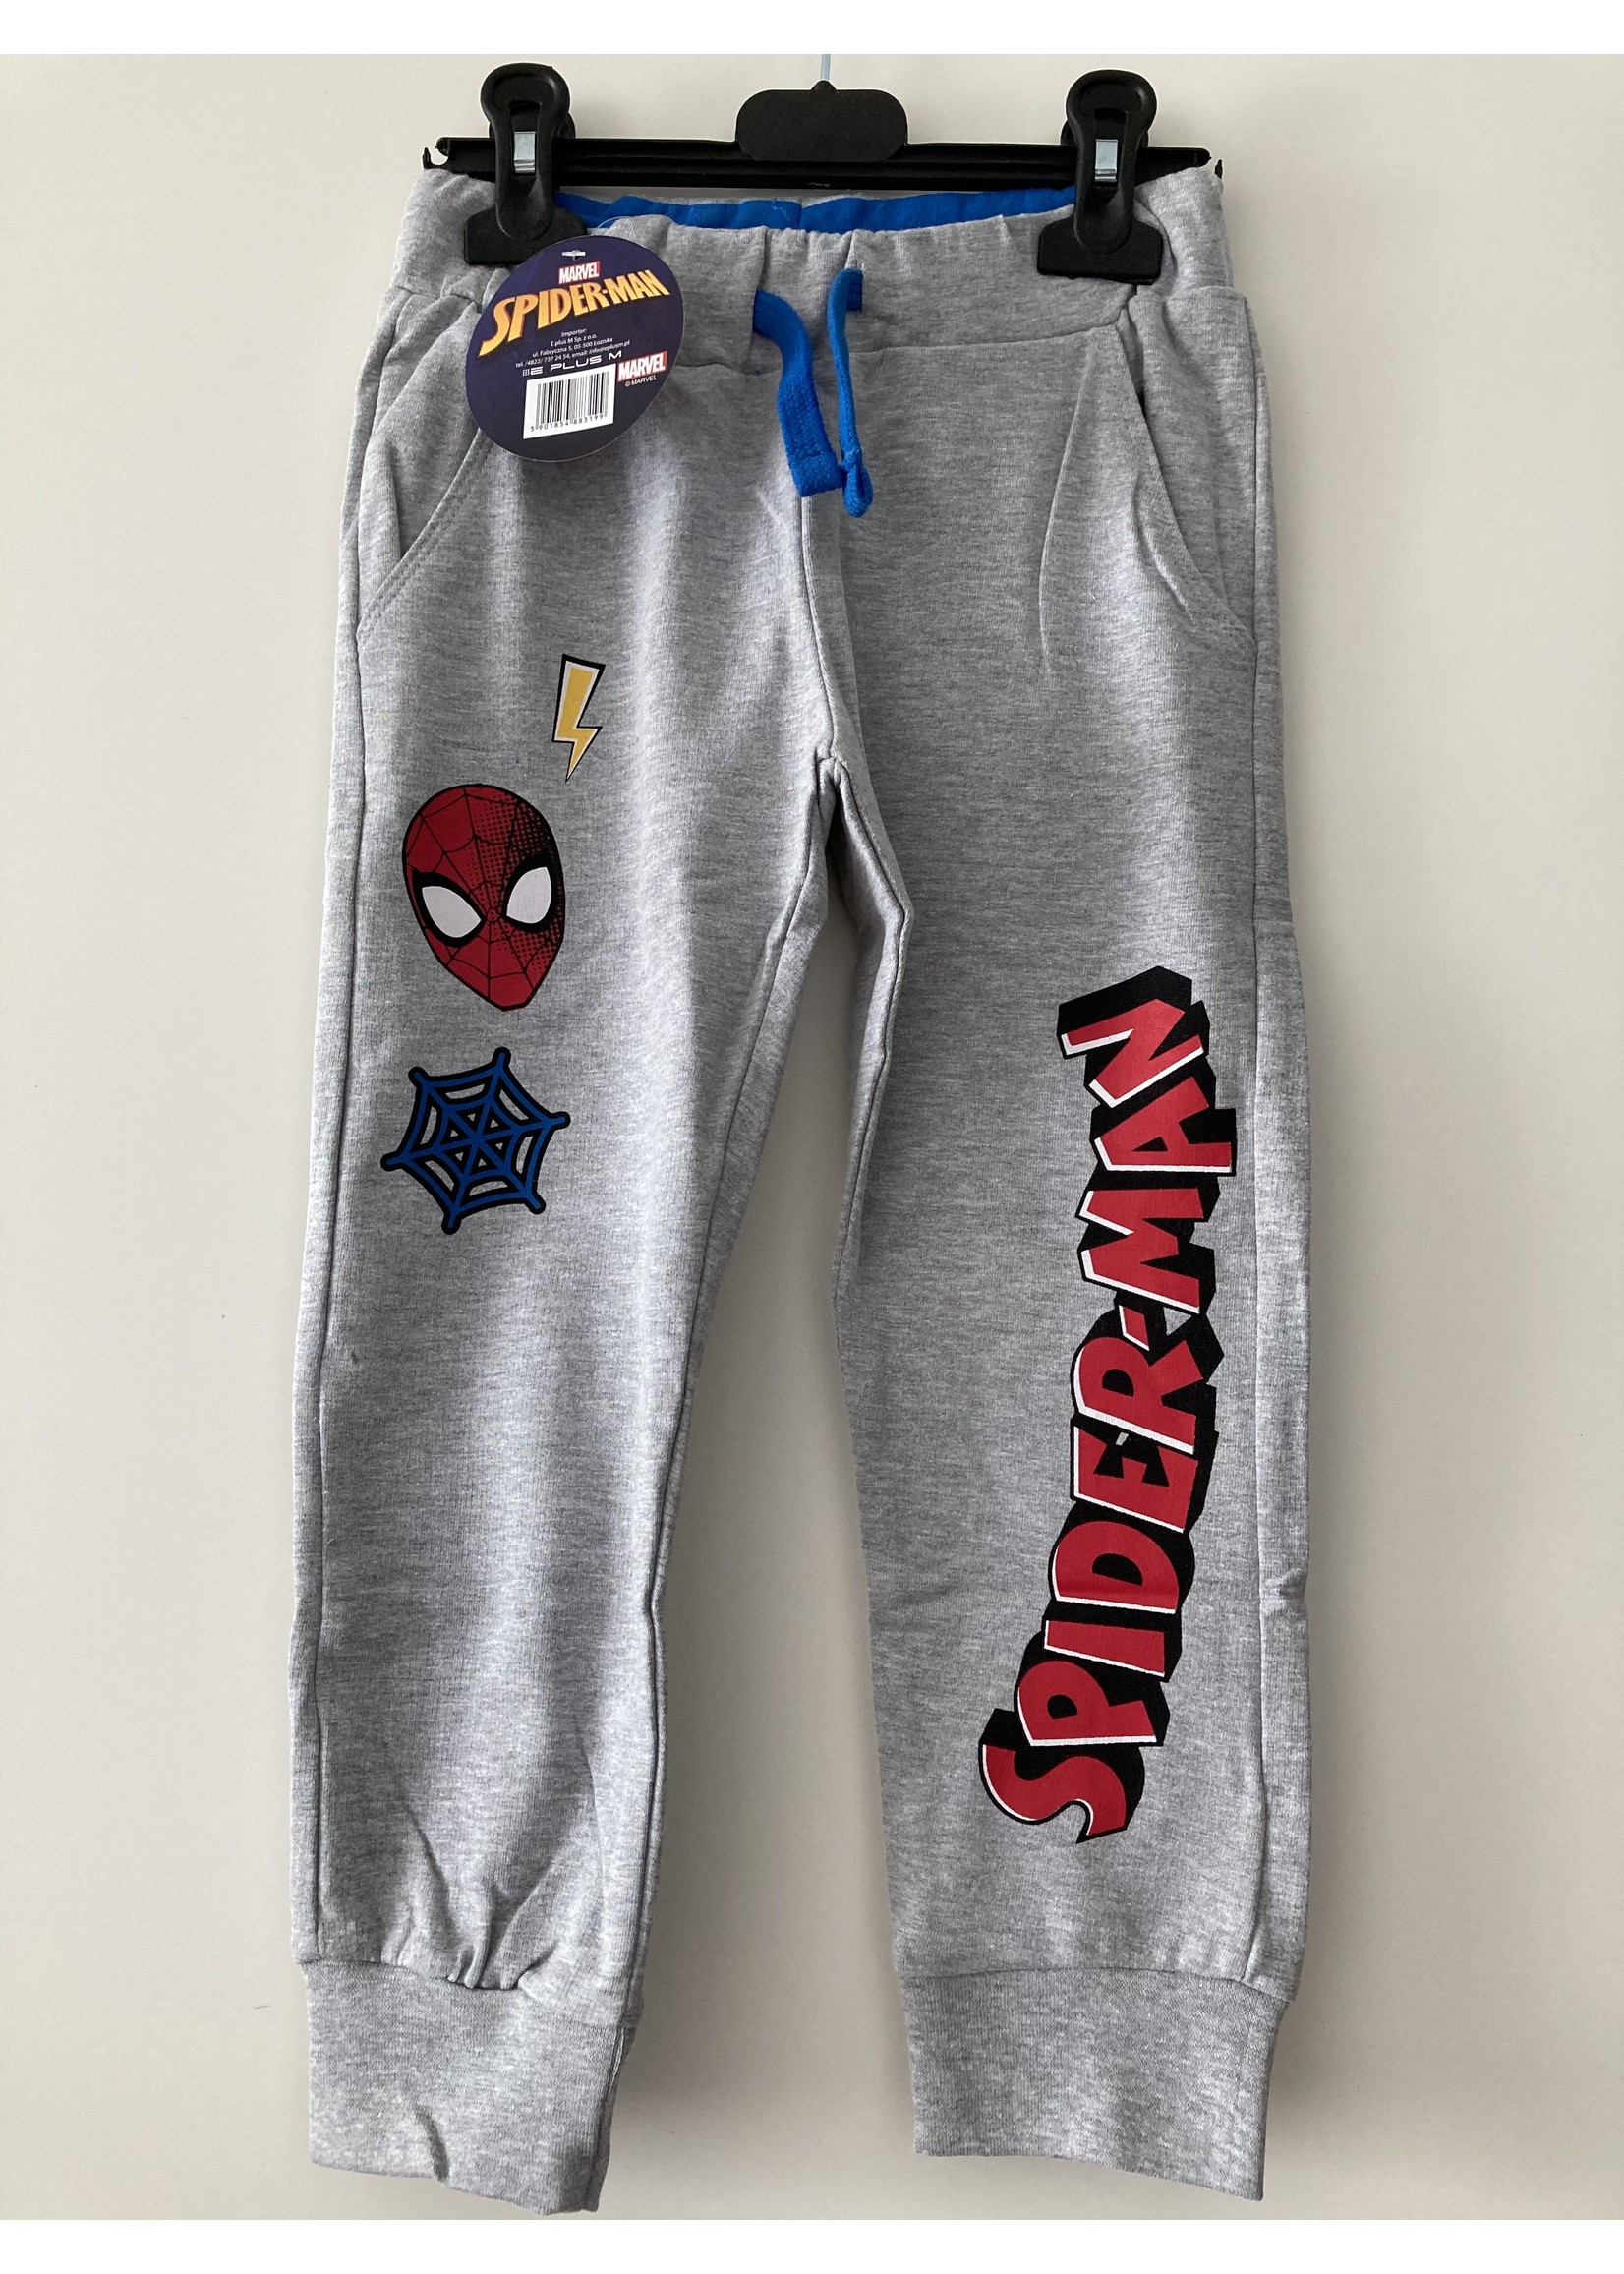 Marvel Spiderman jogging pants from Marvel gray